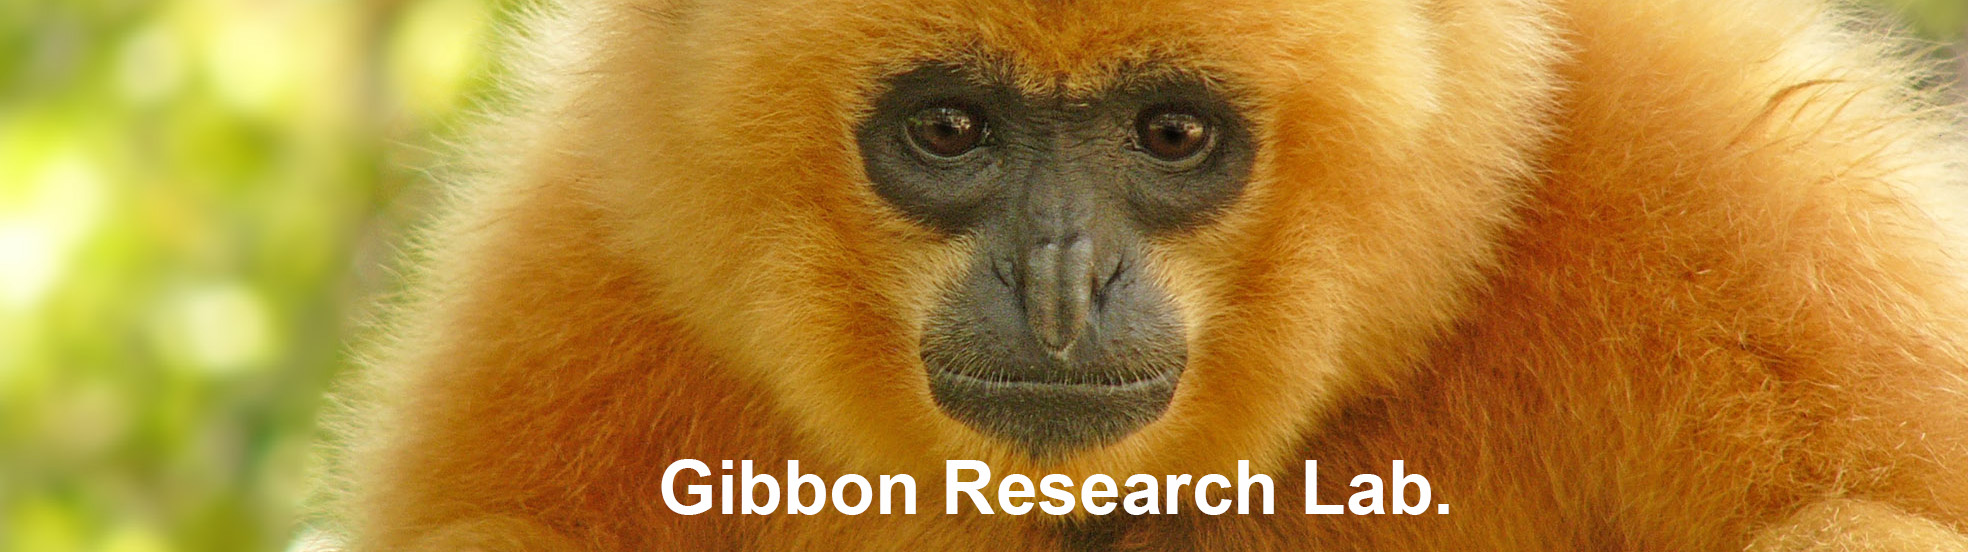 Banner Gibbon Research Lab.